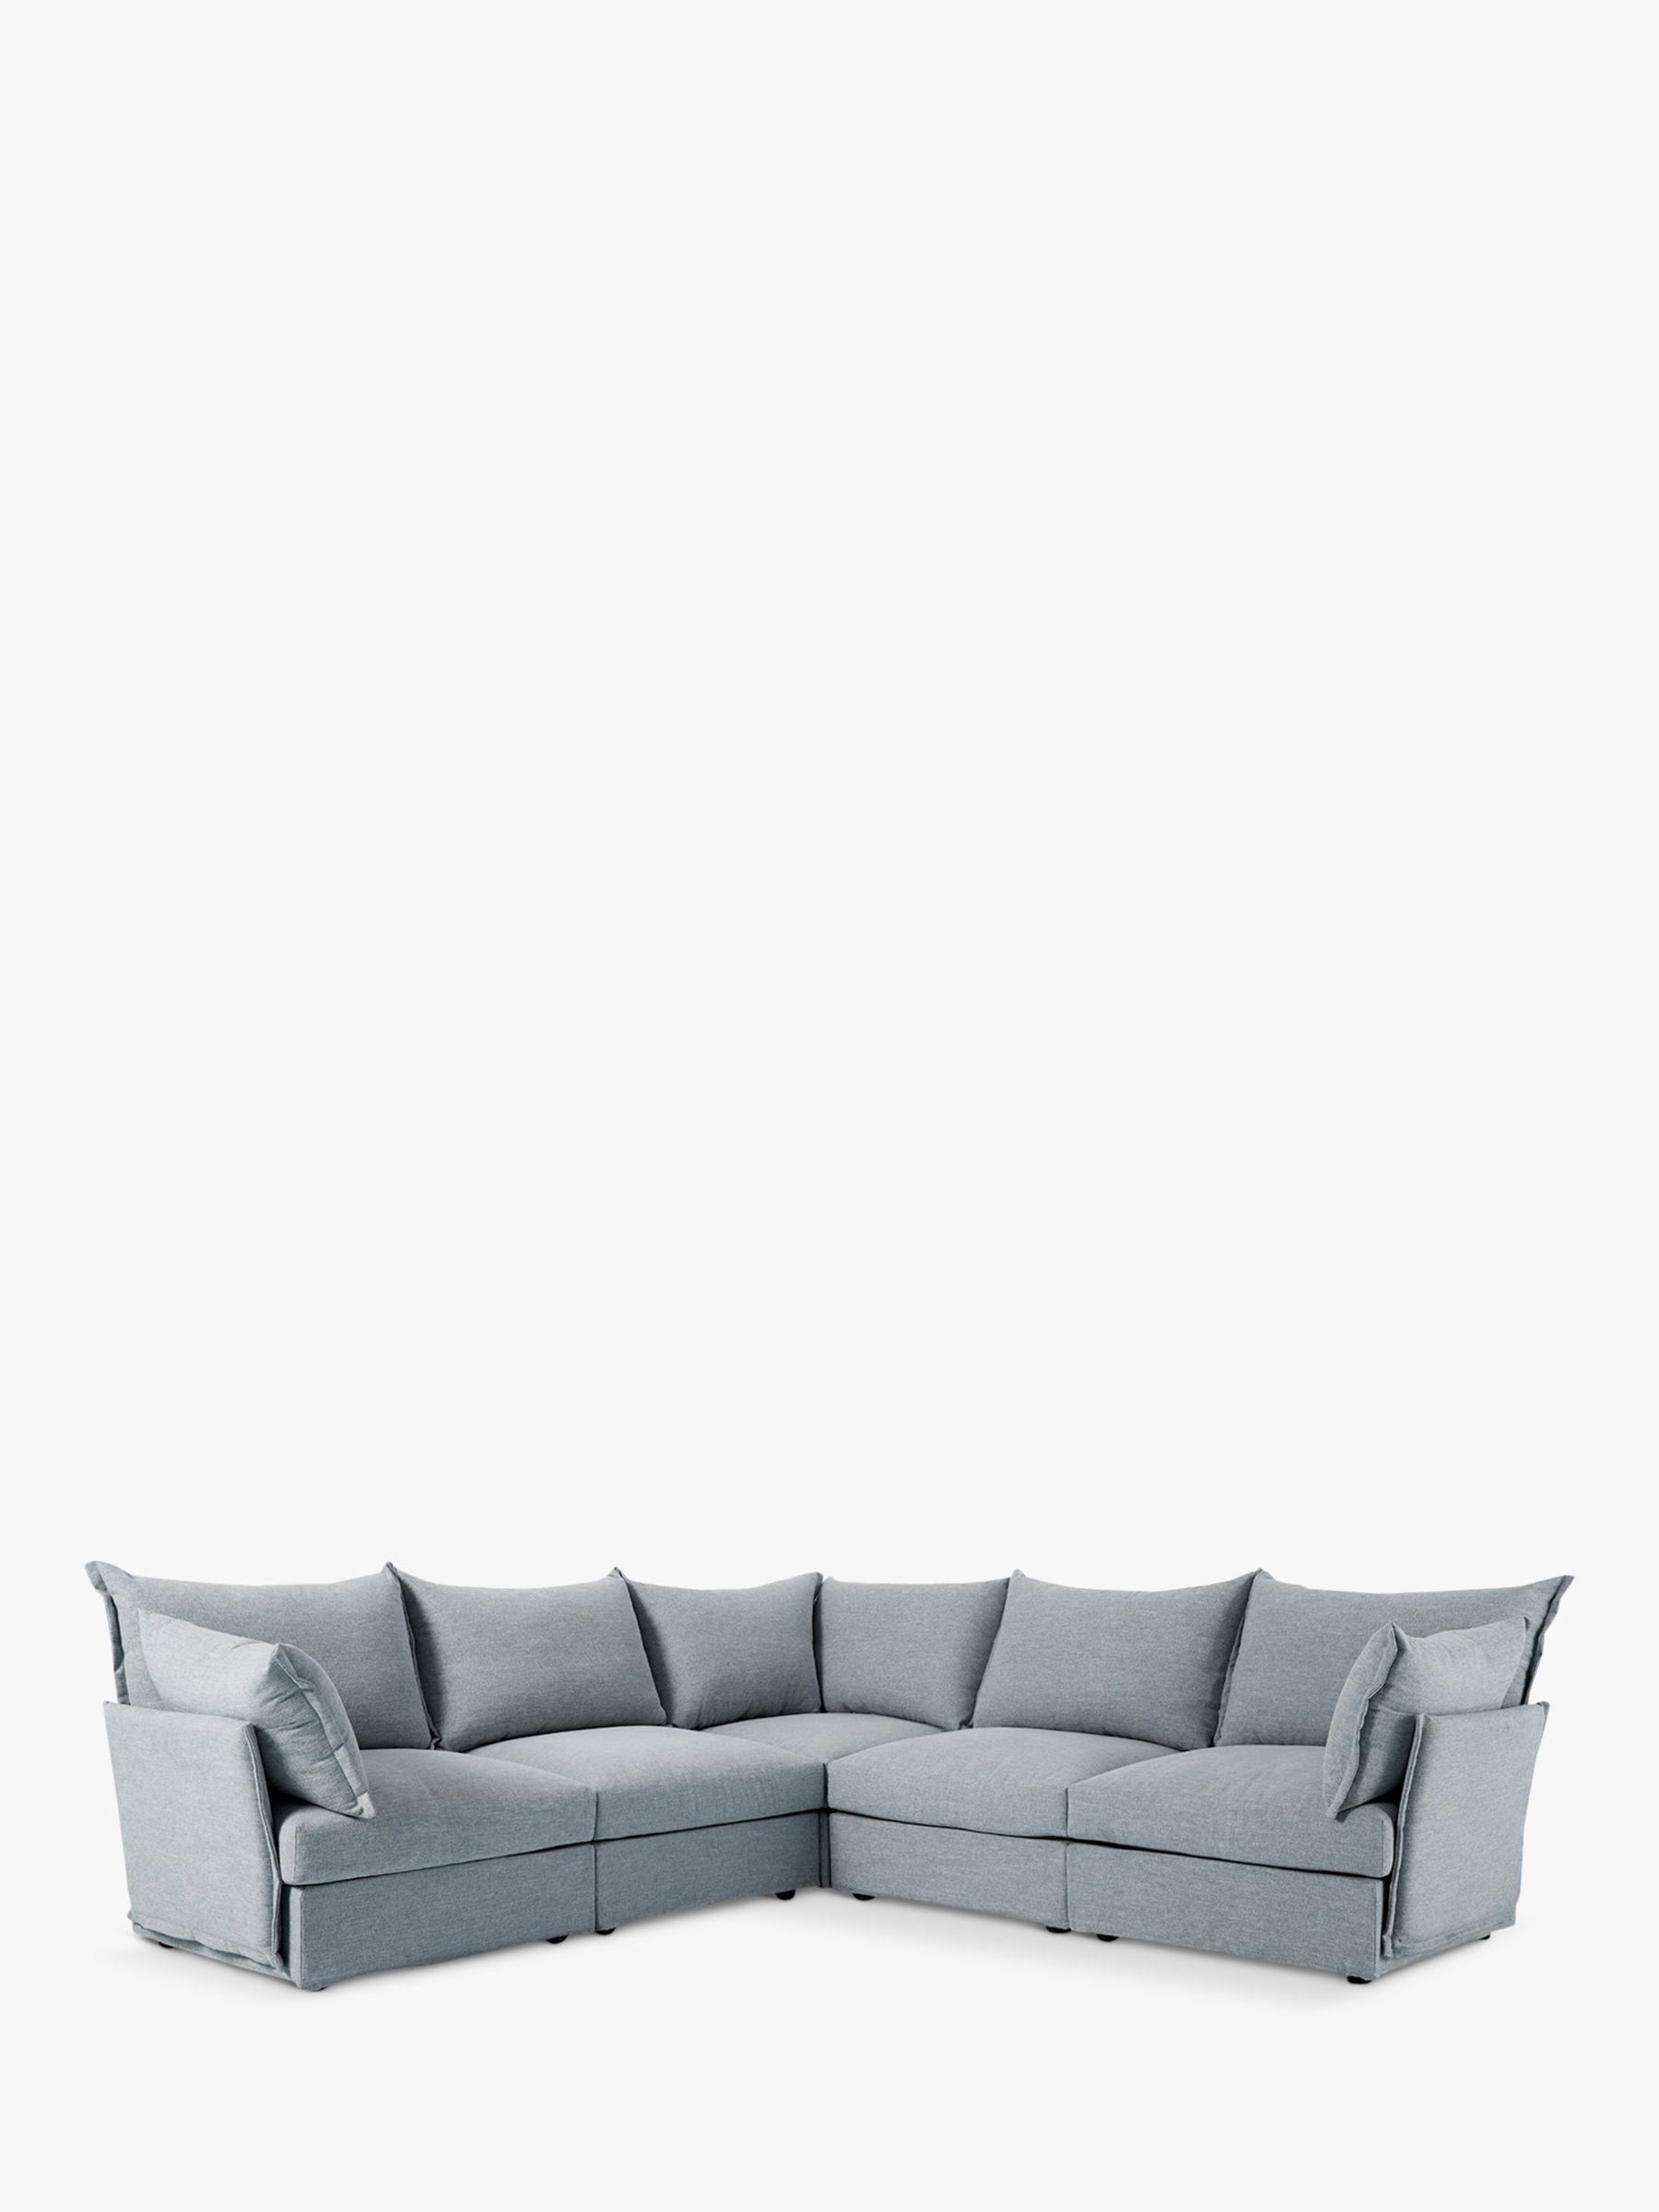 Photo of Swyft model 06 5+ seater corner sofa